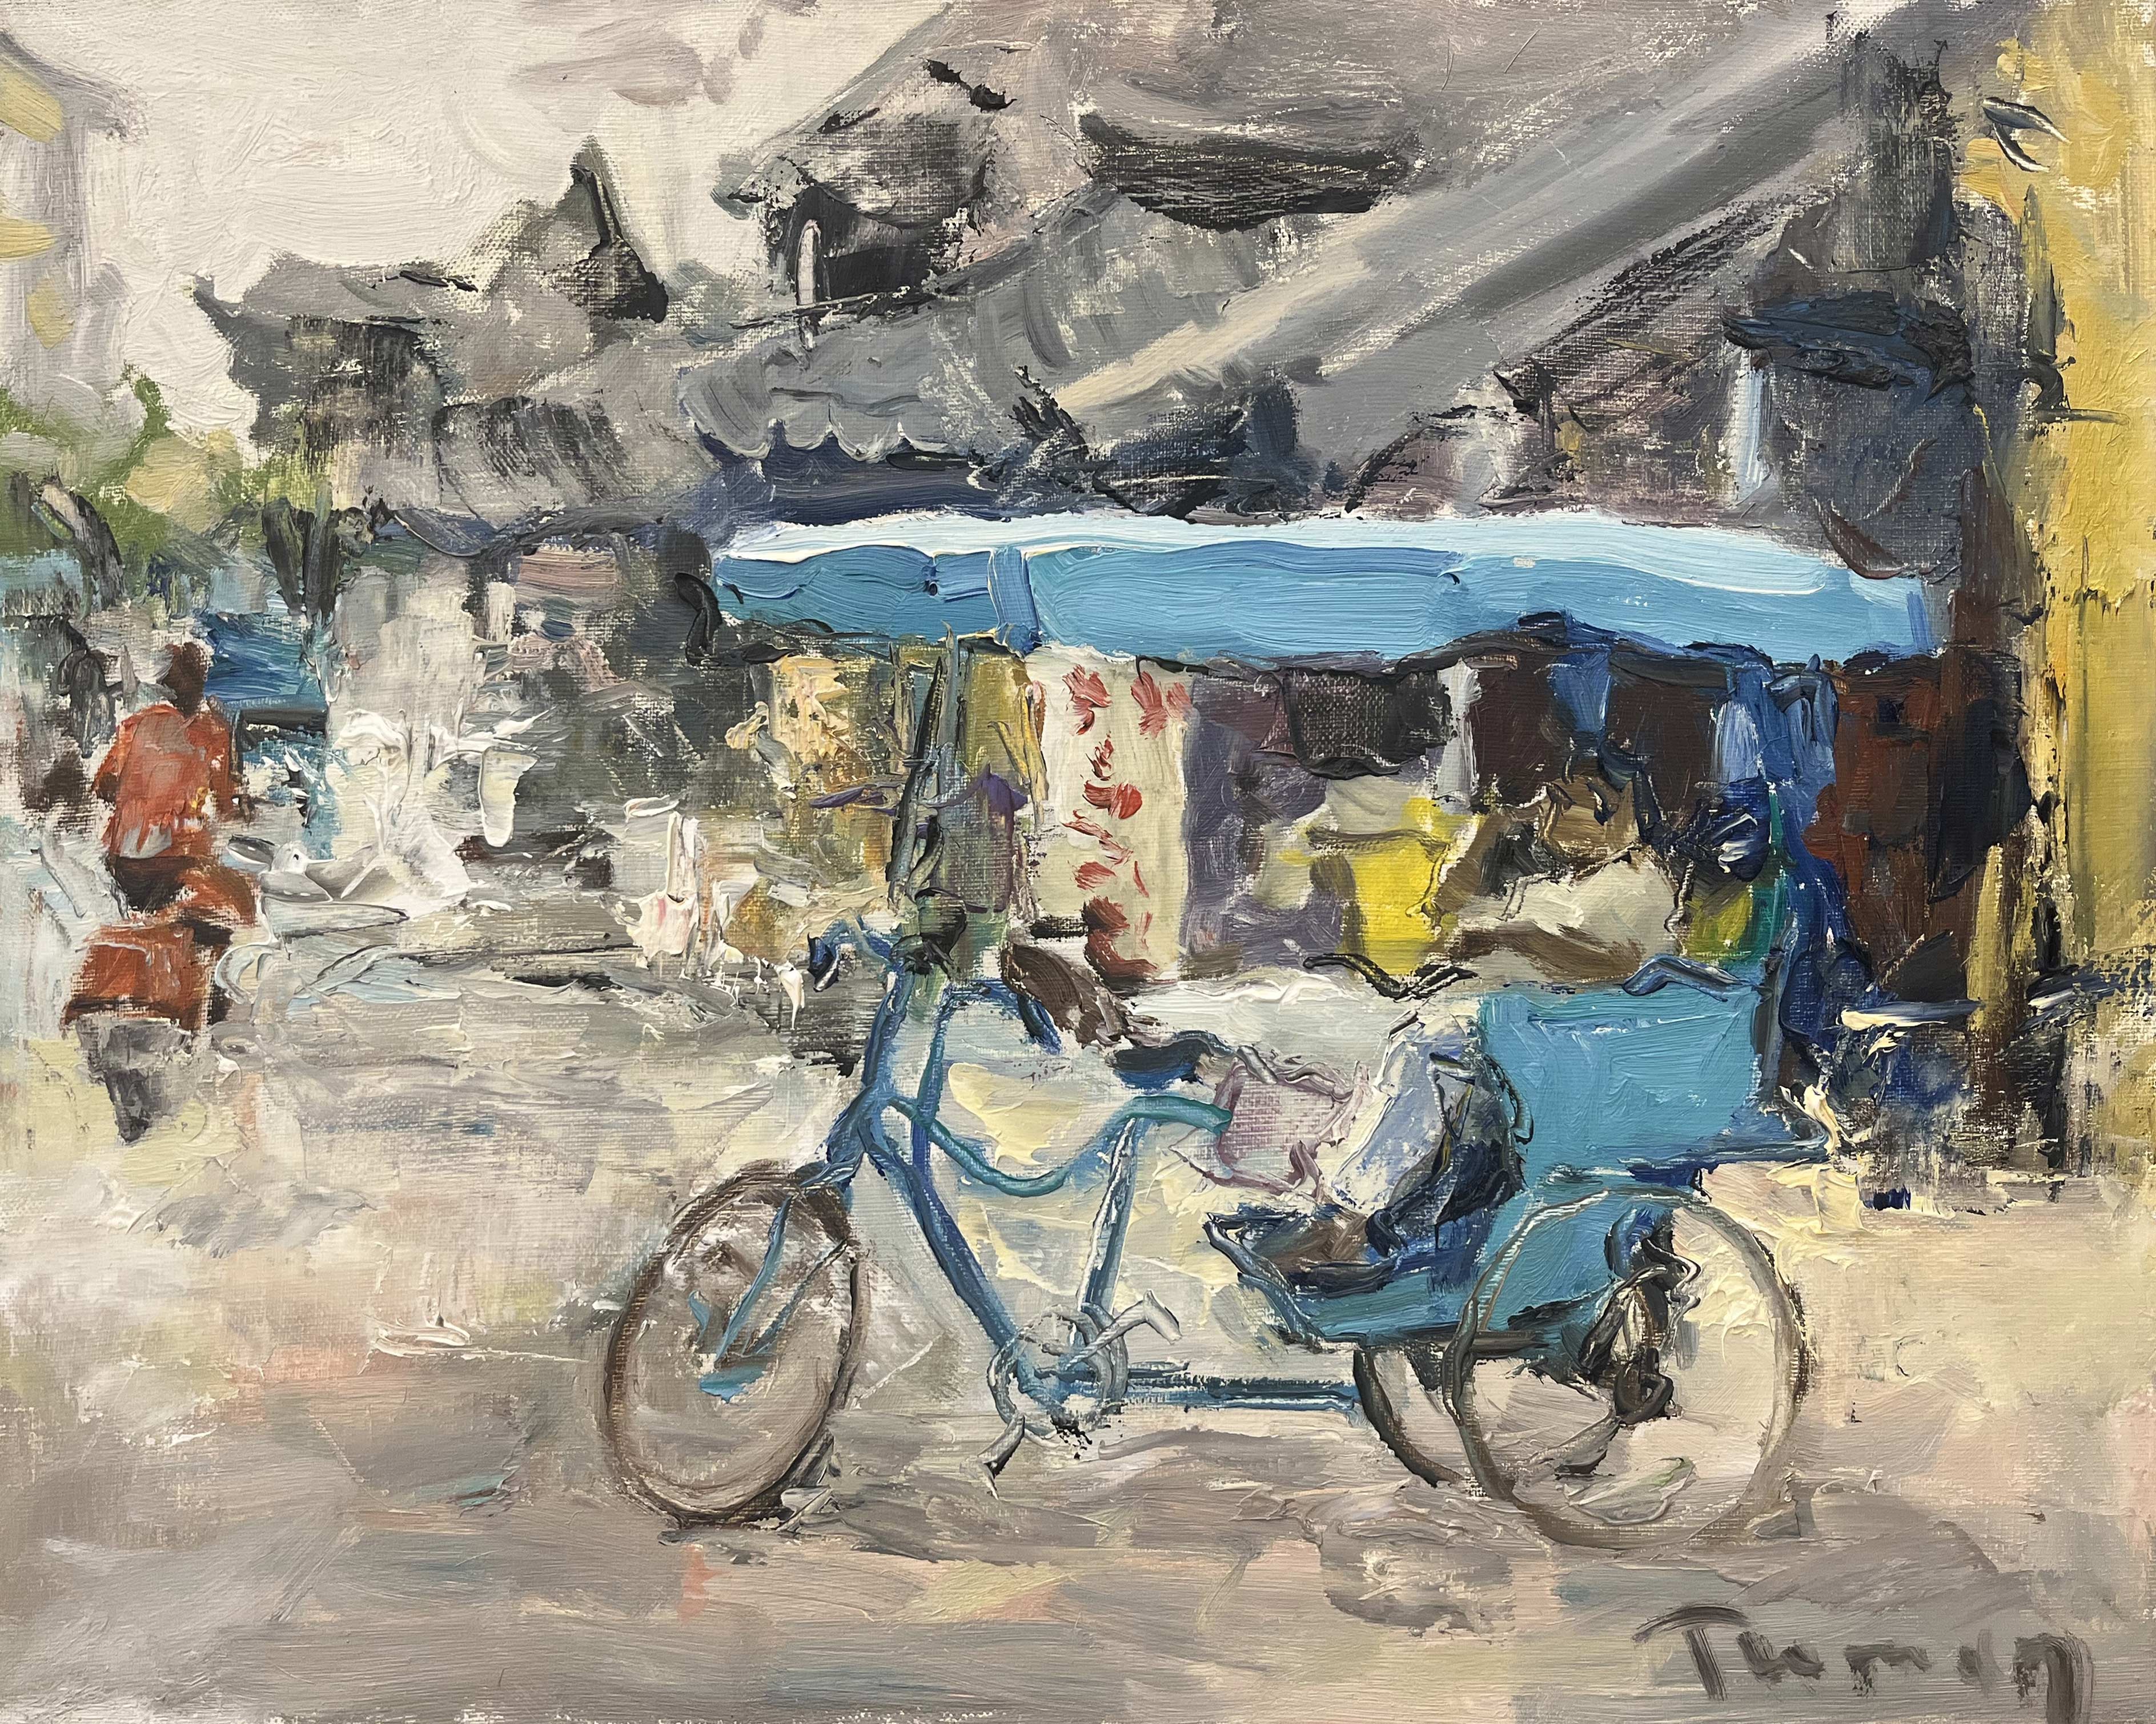 Pedicab - 1, Tuman Zhumabaev, Buy the painting Oil